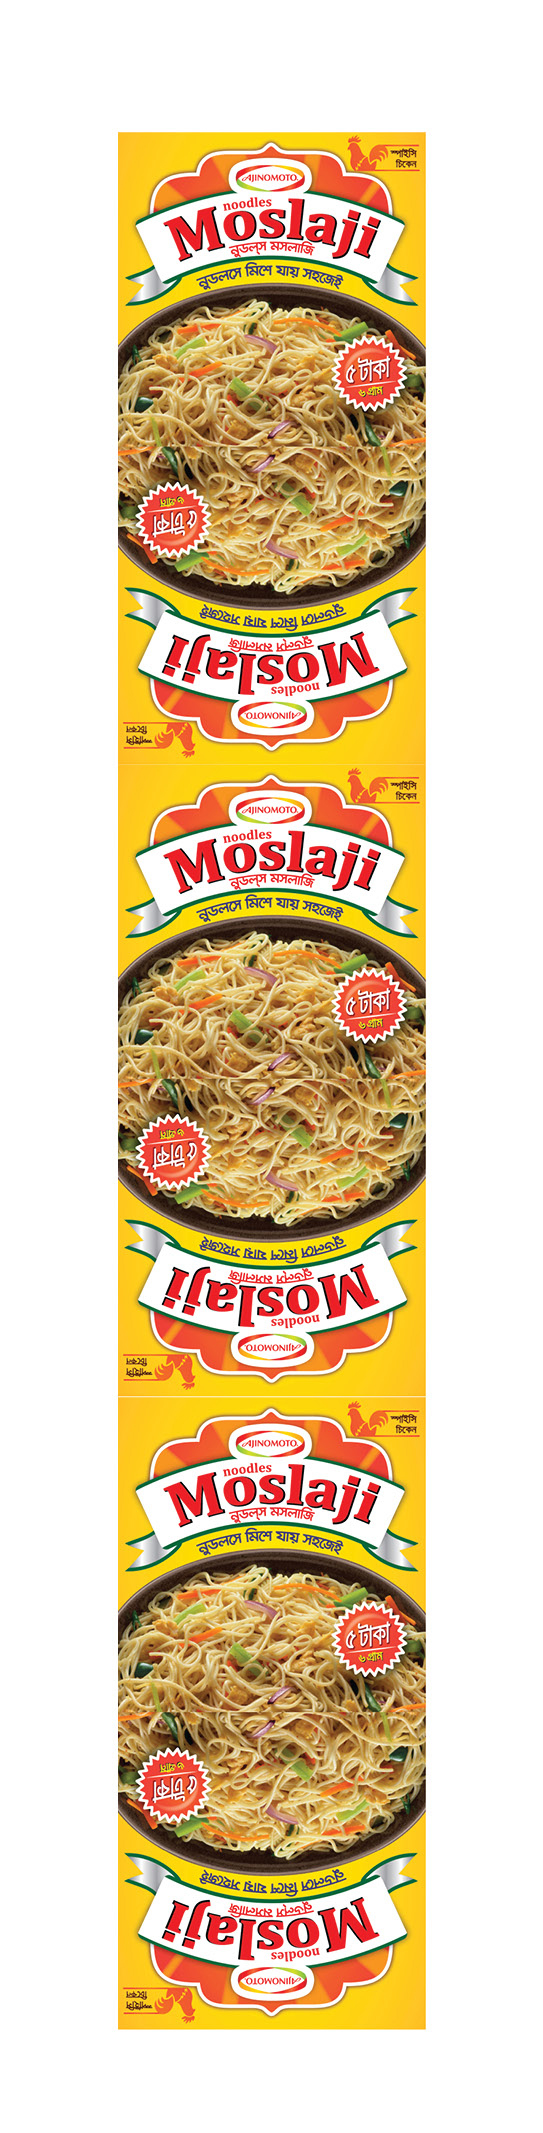 Packaging sachet package design  moslaji noodles seasoning powder product for Bangladesh